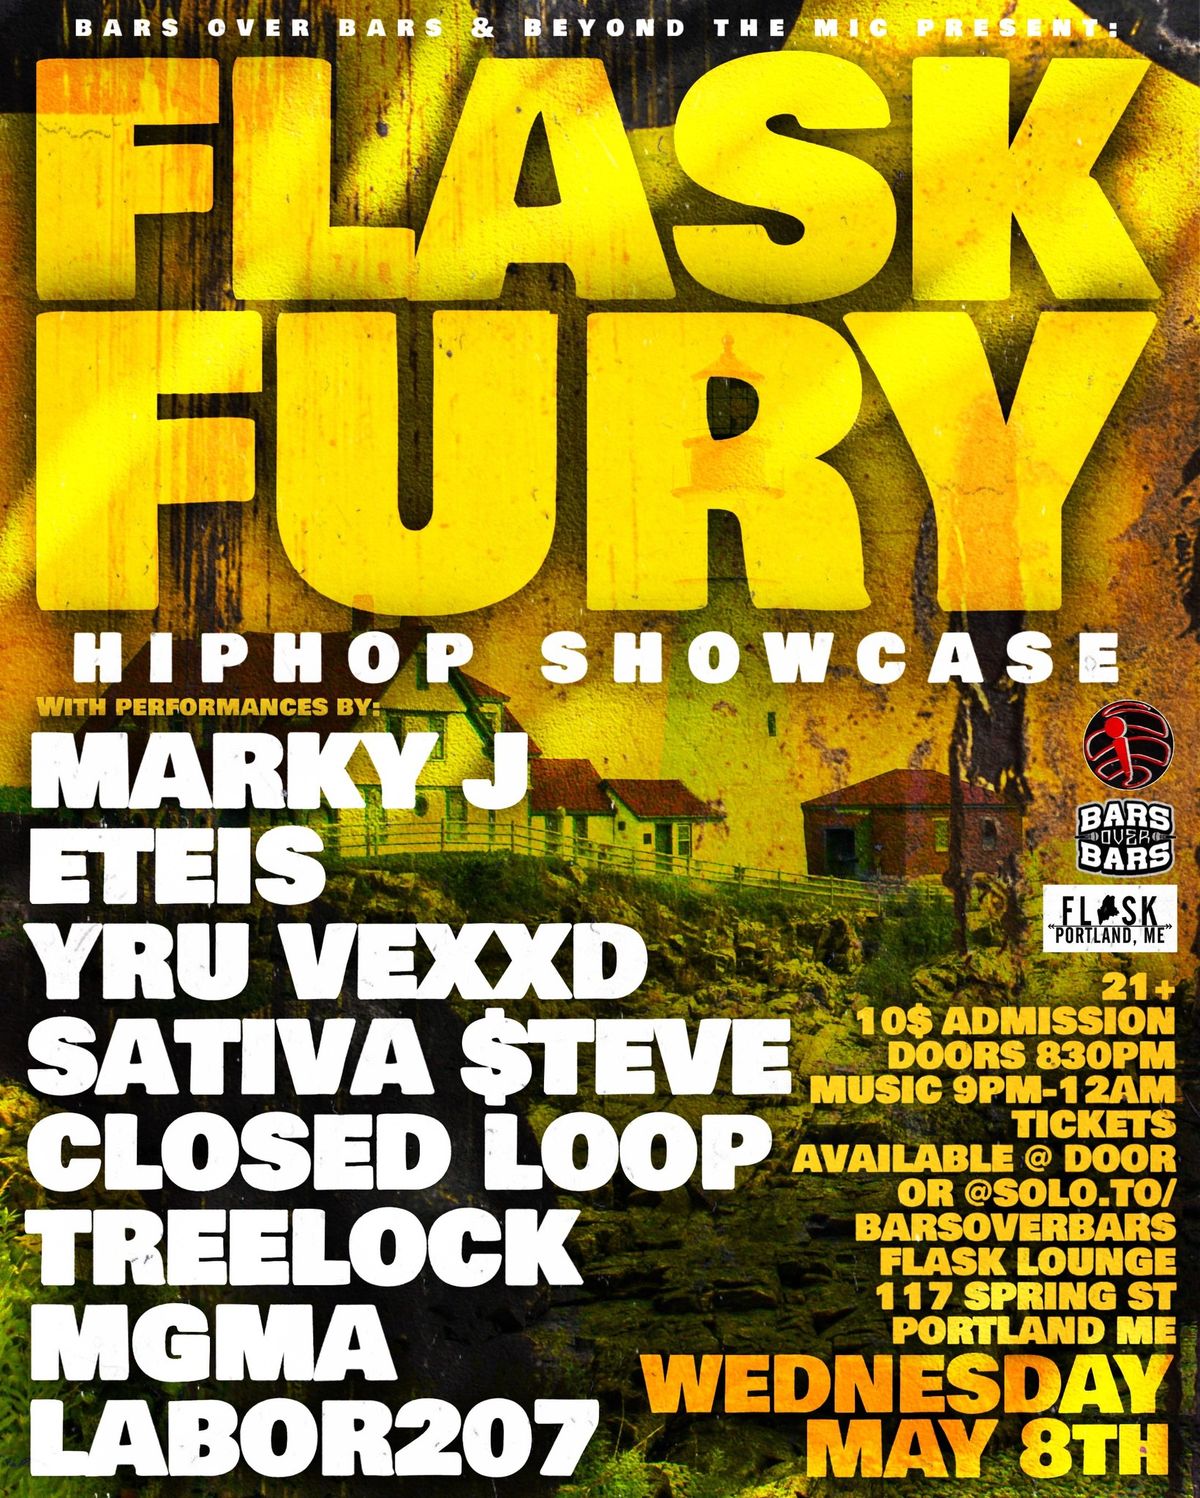 Bars Over Bars Presents: Flask Fury Hiphop Showcase 05\/08\/24